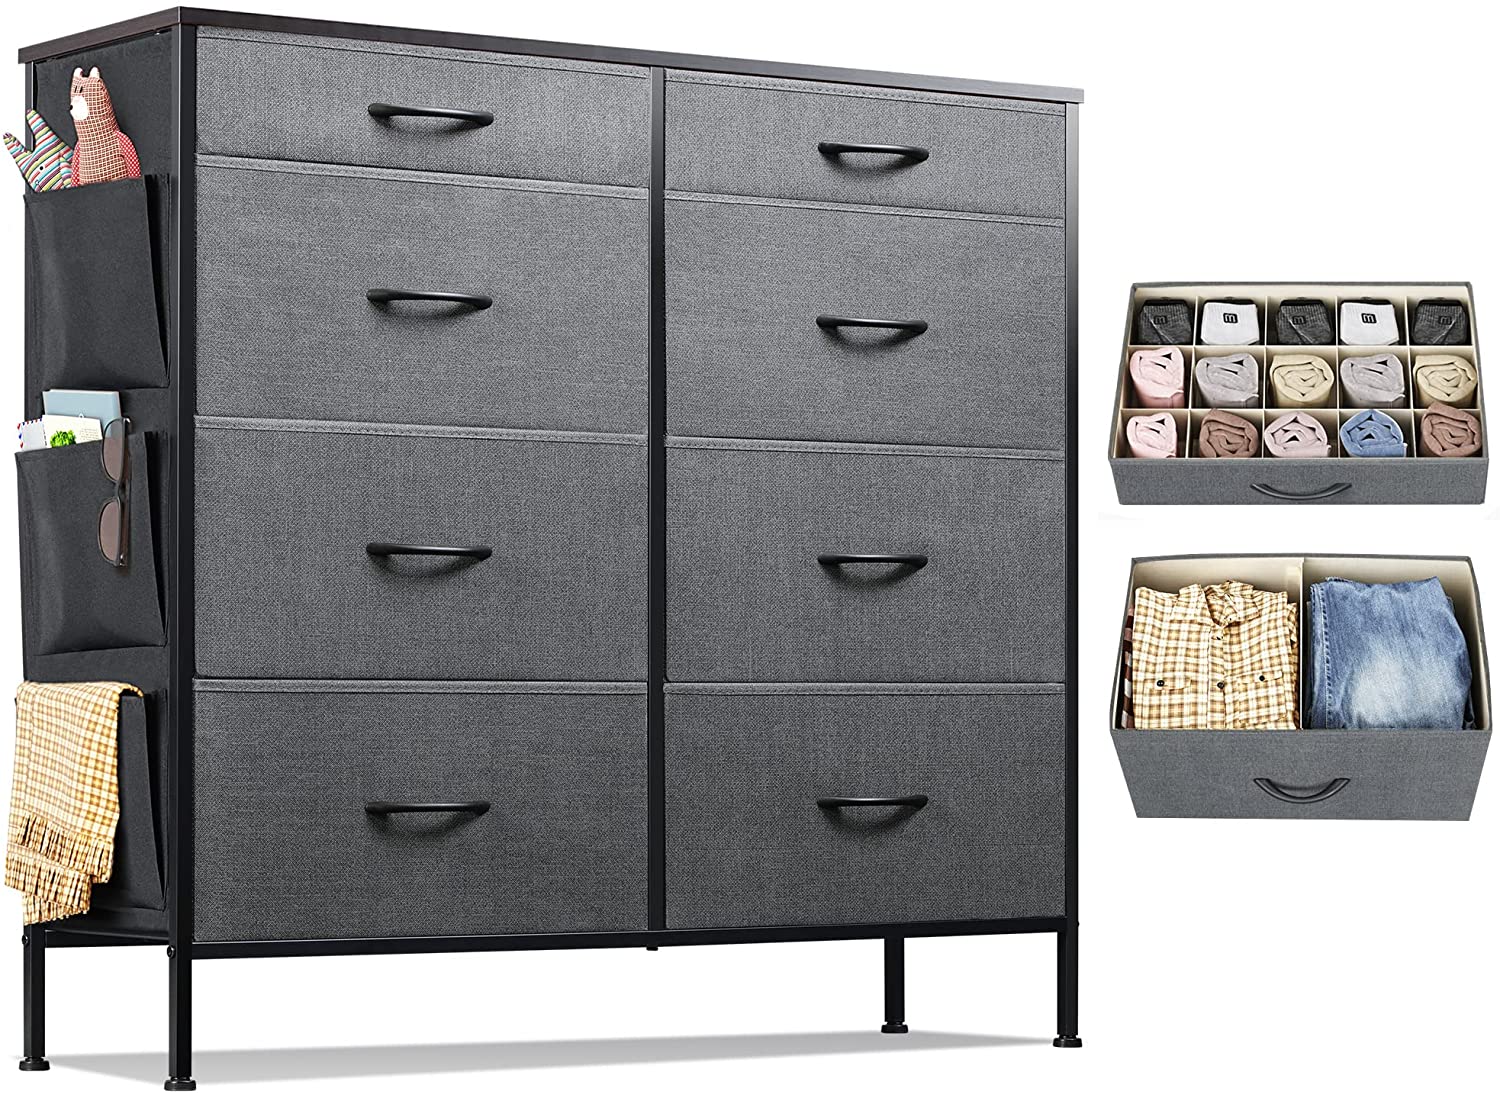 Dark Grey 8 Drawer Fabric Dresser with Side Pockets